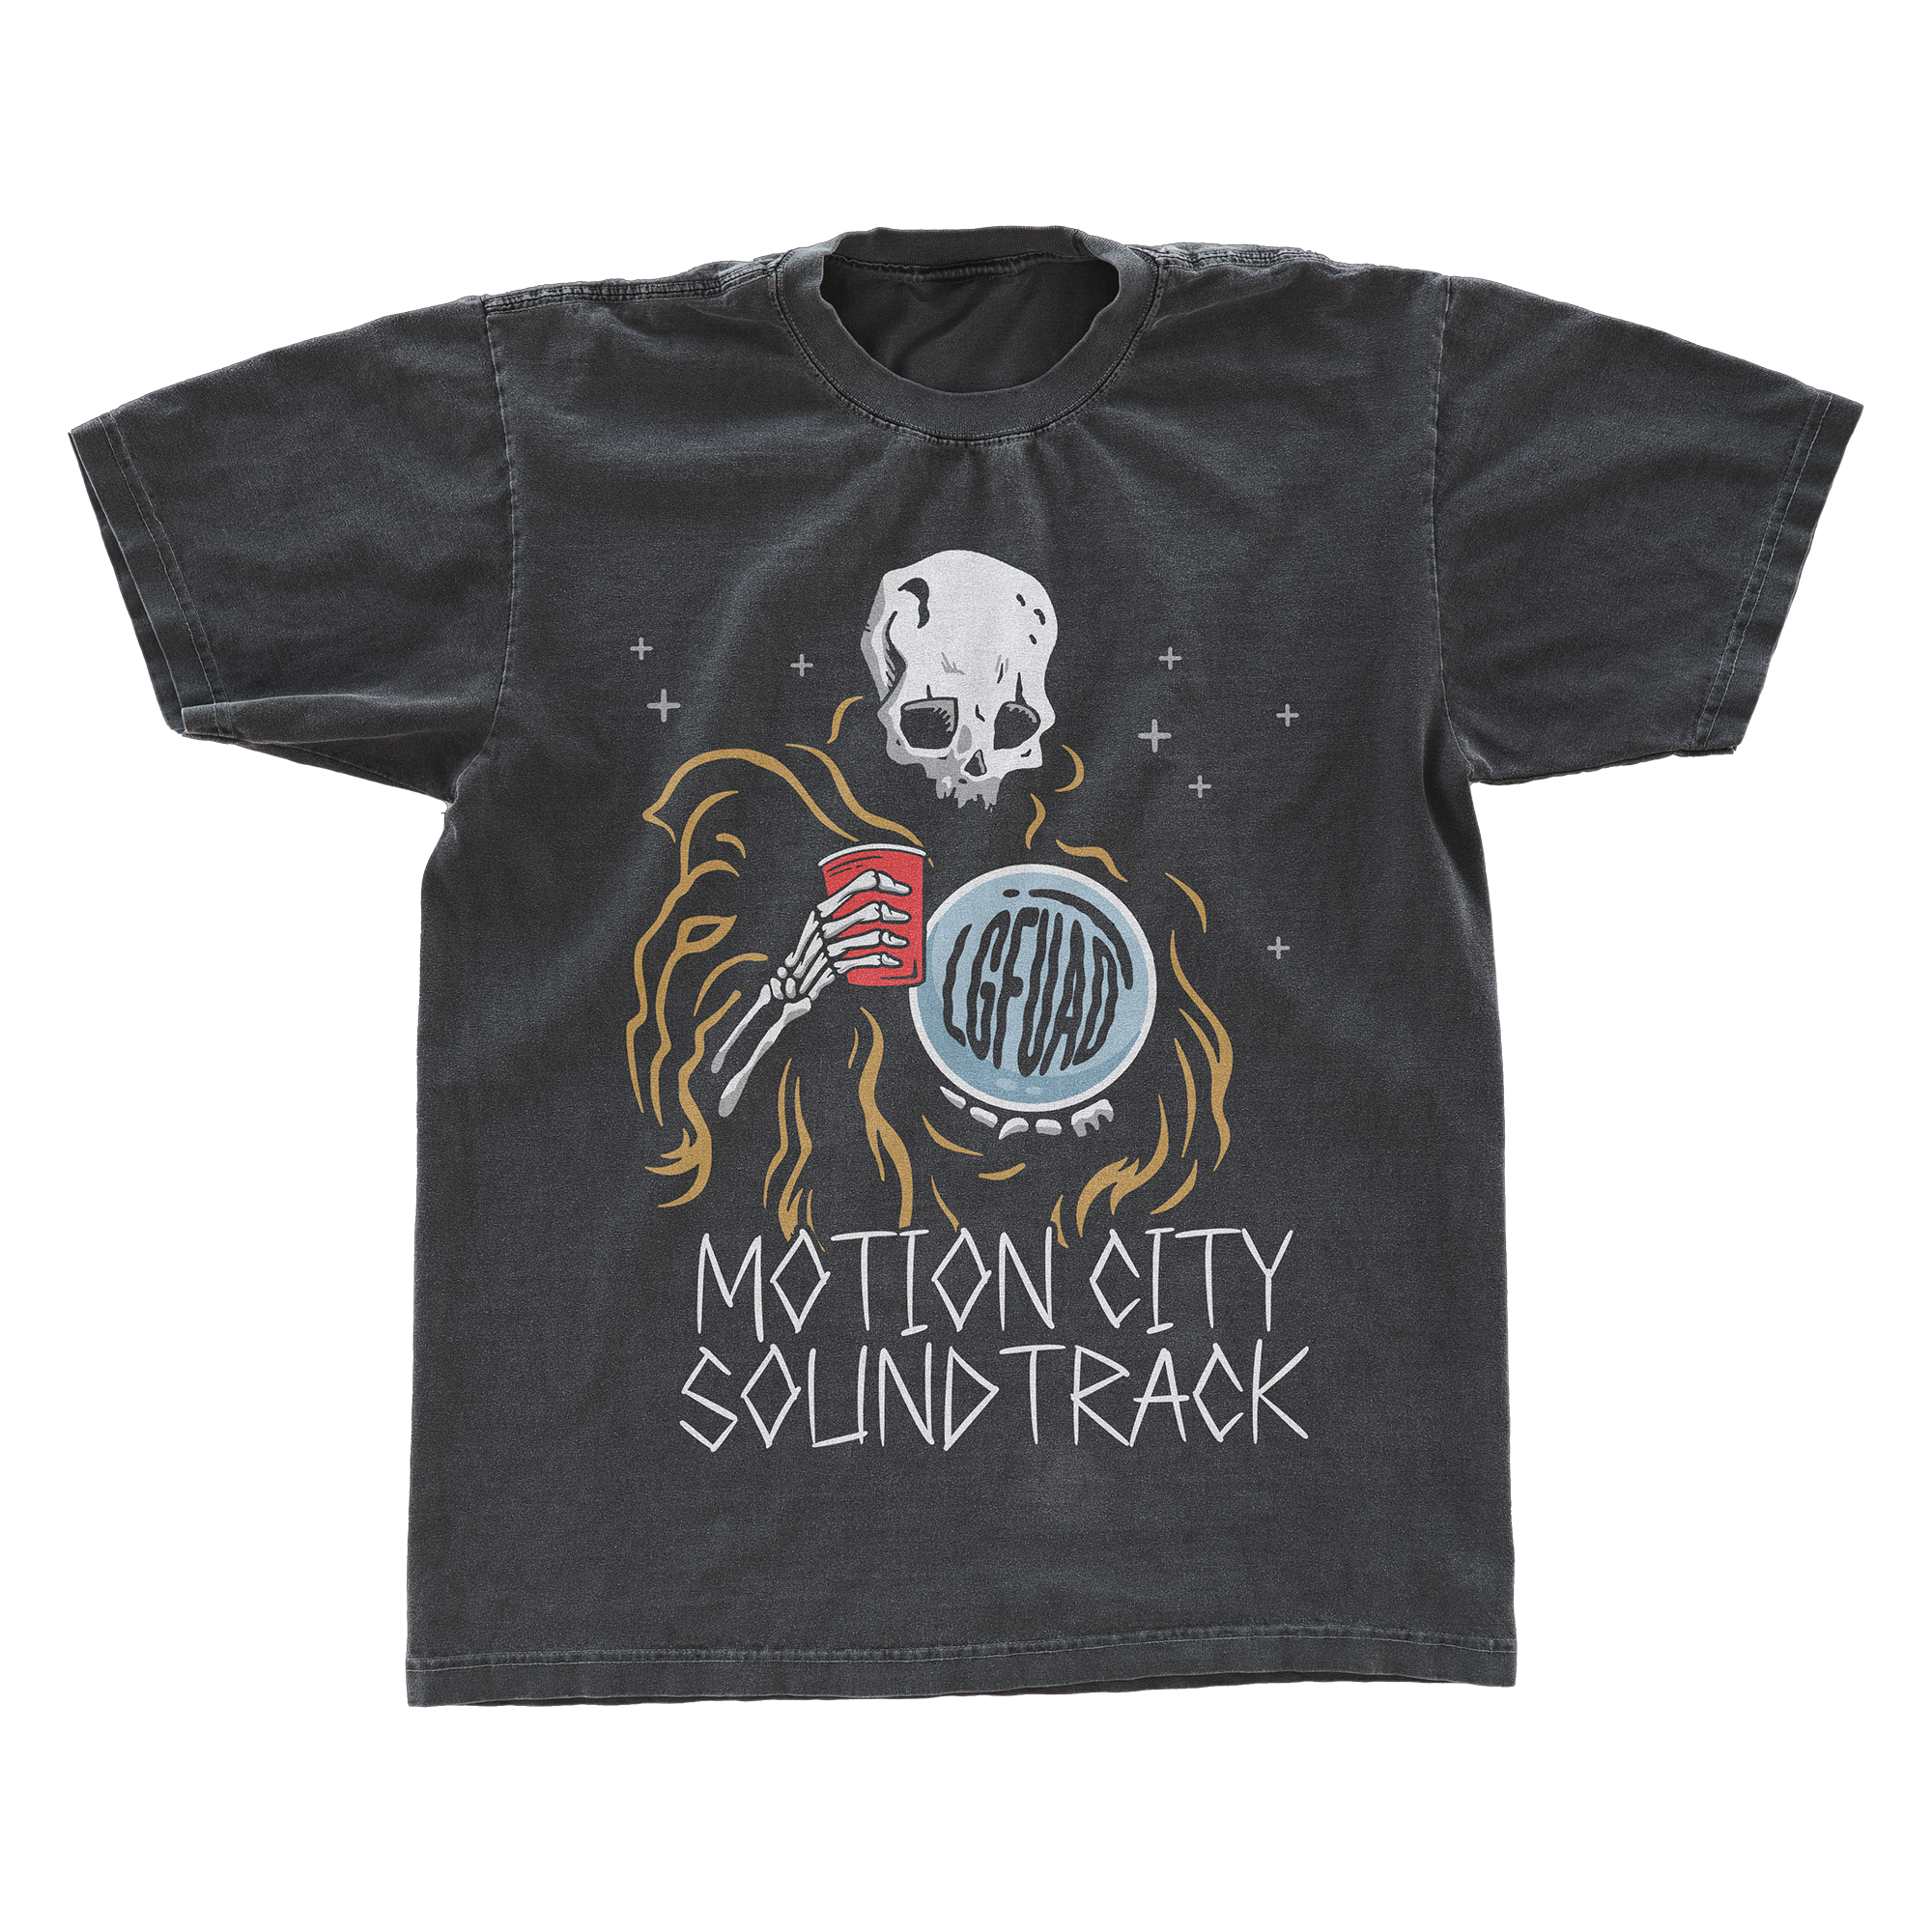 Motion City Soundtrack Official Merch Store